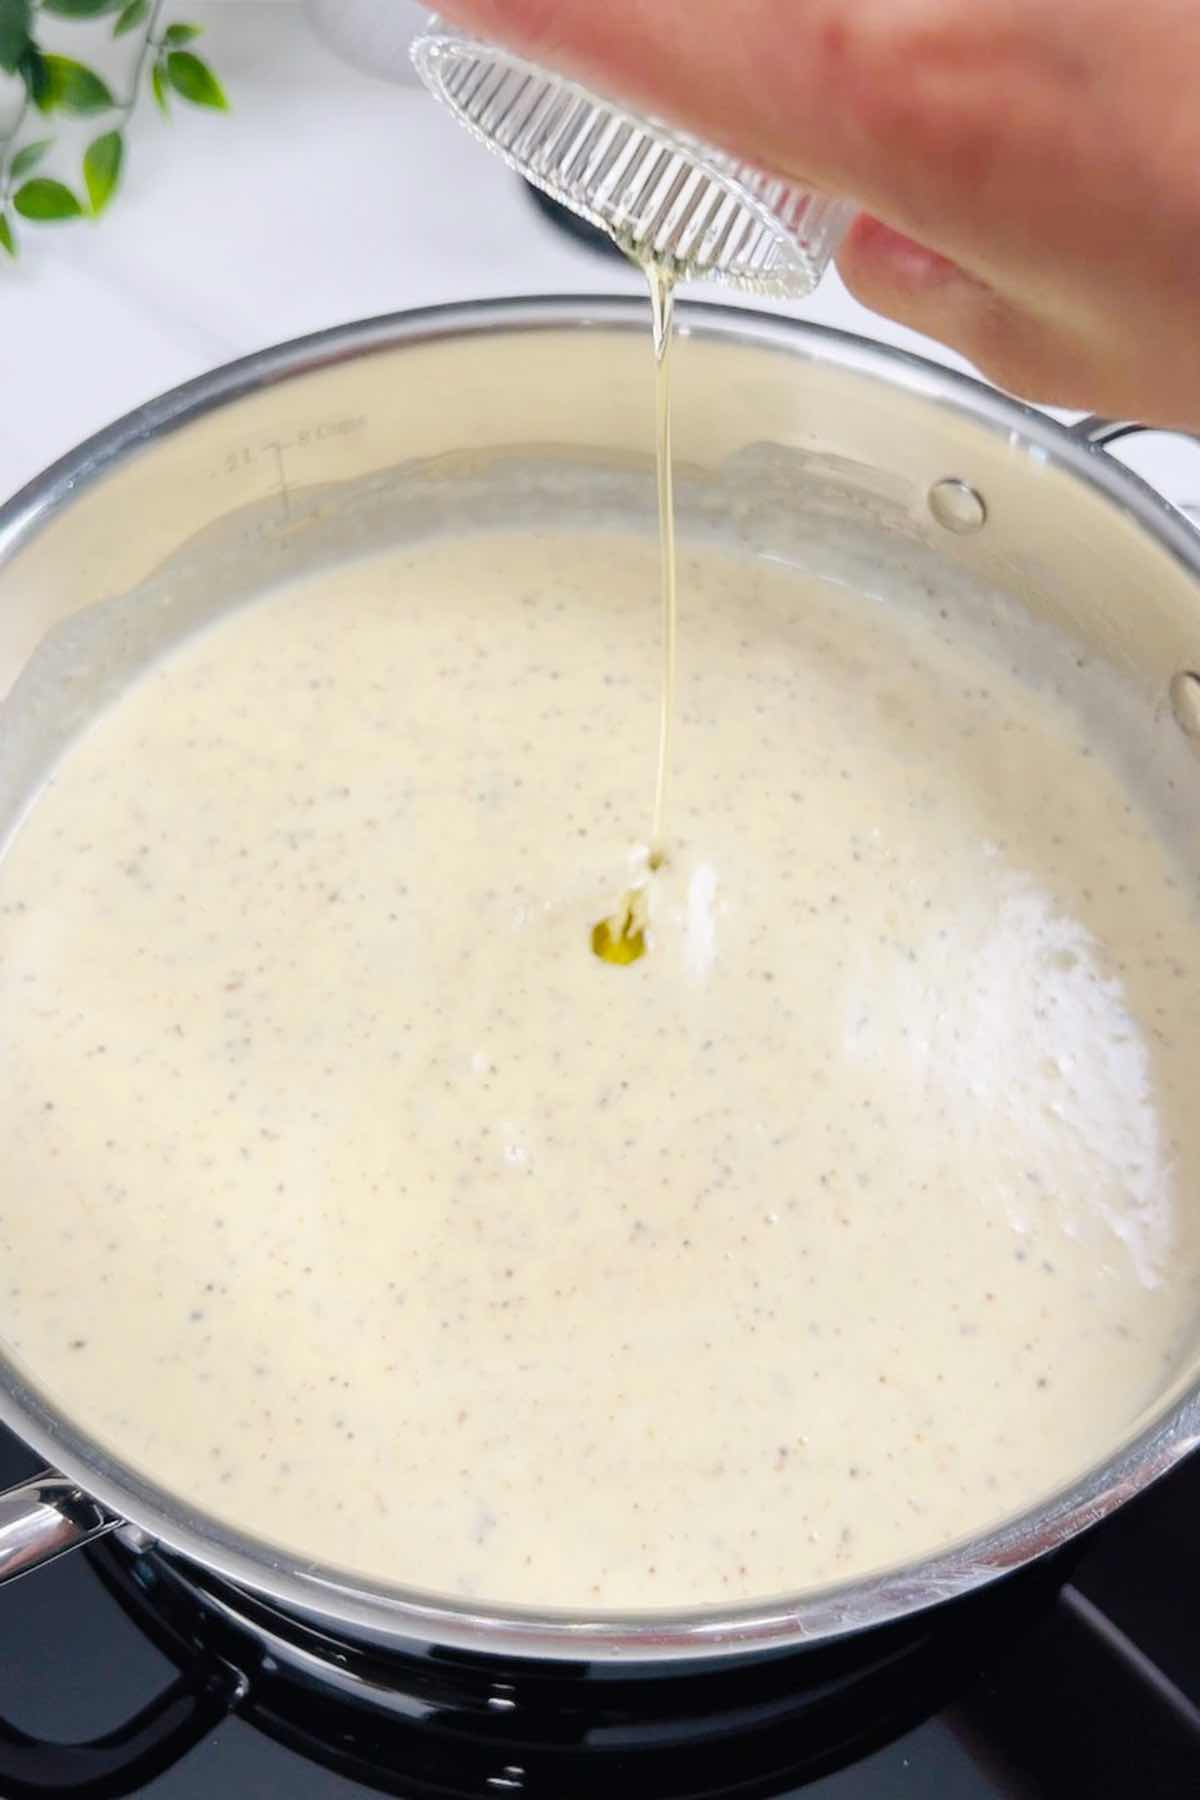 adding truffle oil to the pasta sauce